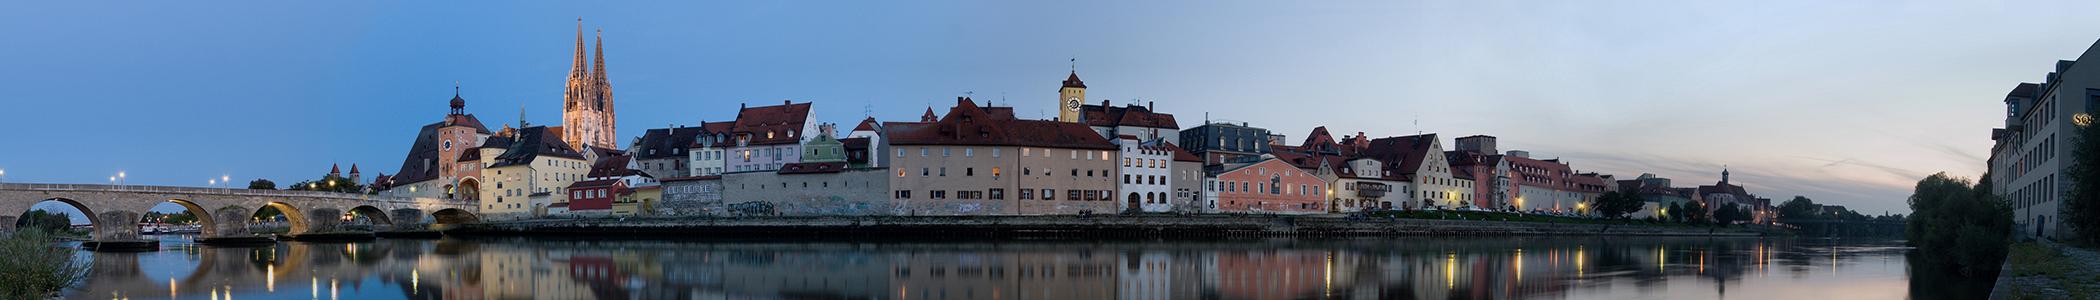 Banner image for Regensburg on GigsGuide